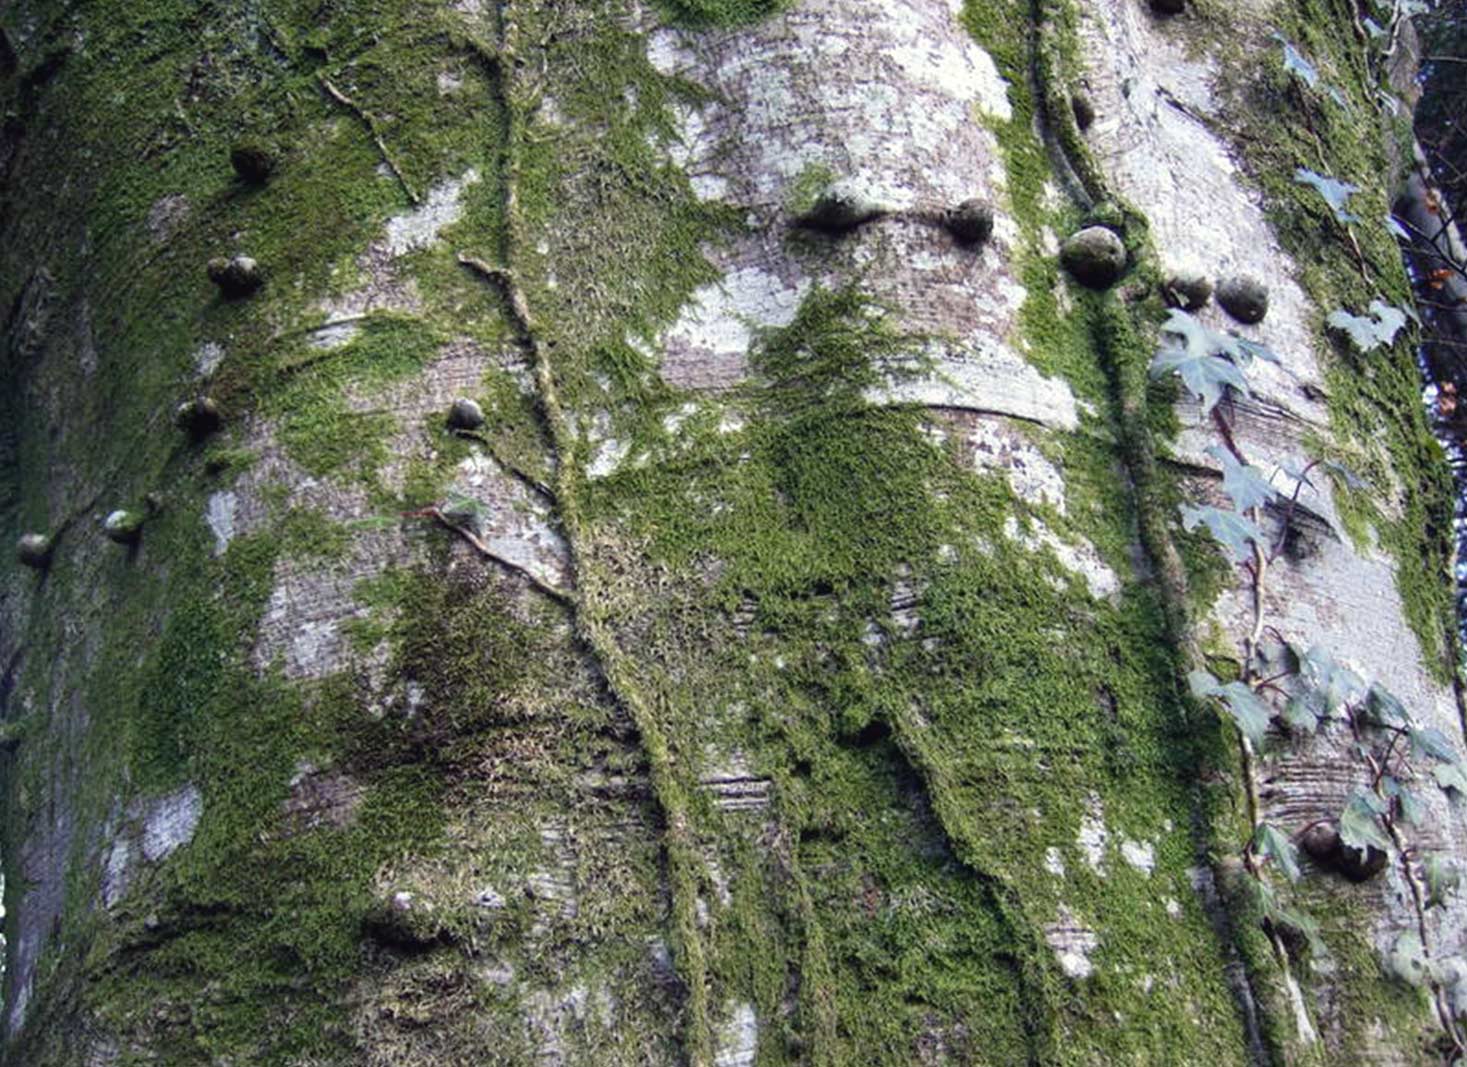 Notable bark features in specific tree species